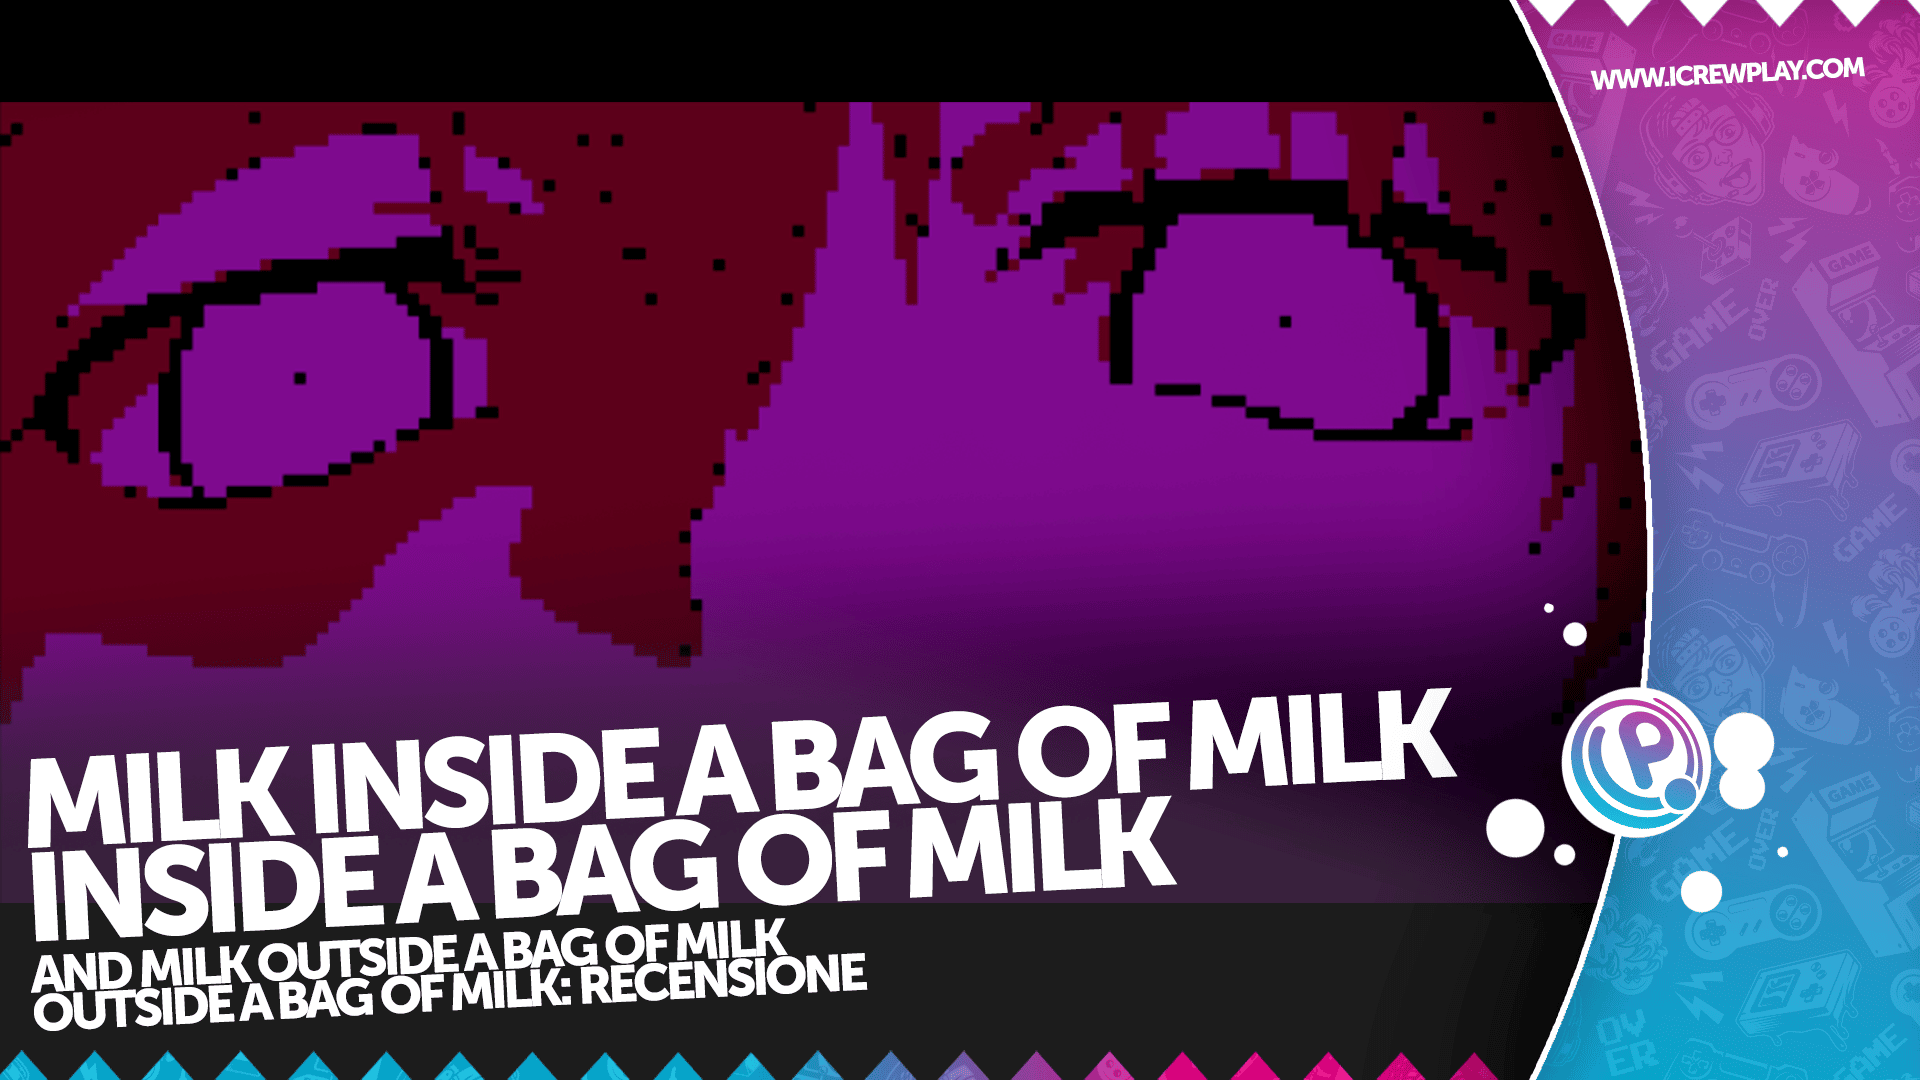 Milk inside a bag of milk inside a bag of milk and Milk outside a bag of milk outside a bag of milk: recensione per Nintendo Switch 4